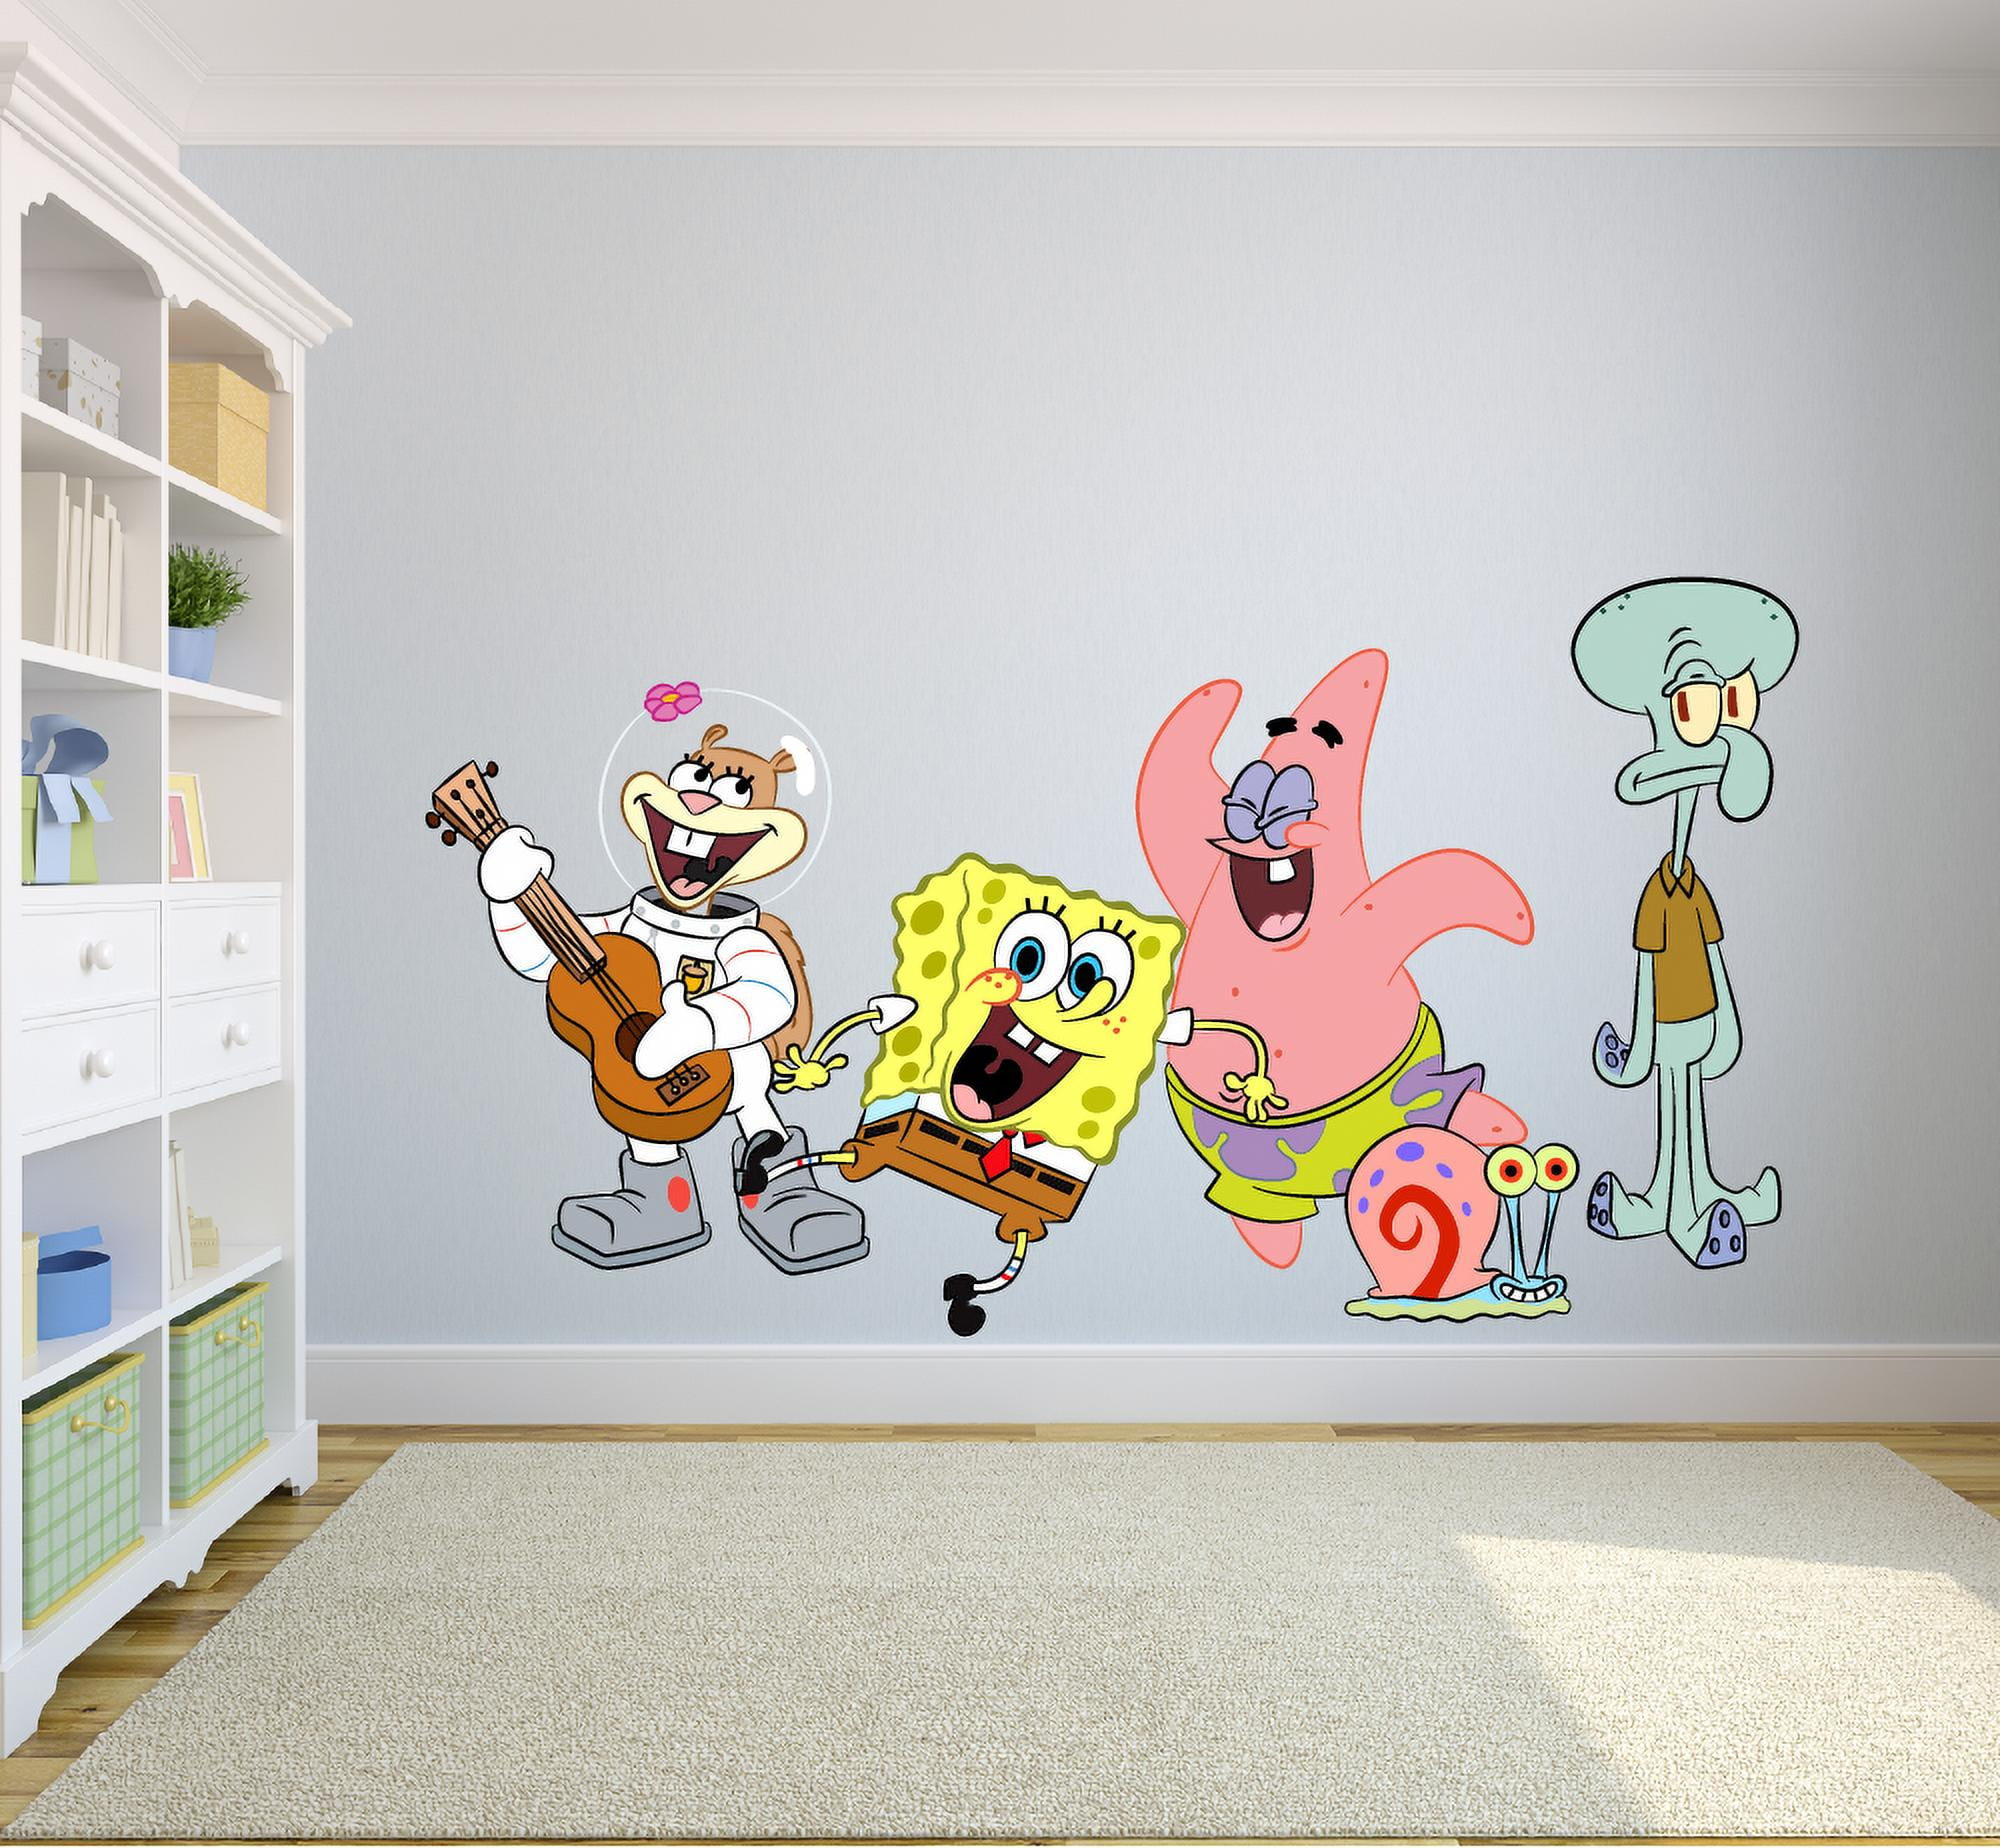 45 New SPONGEBOB SQUAREPANTS WALL DECALS Kids Bedroom Stickers Room Decorations